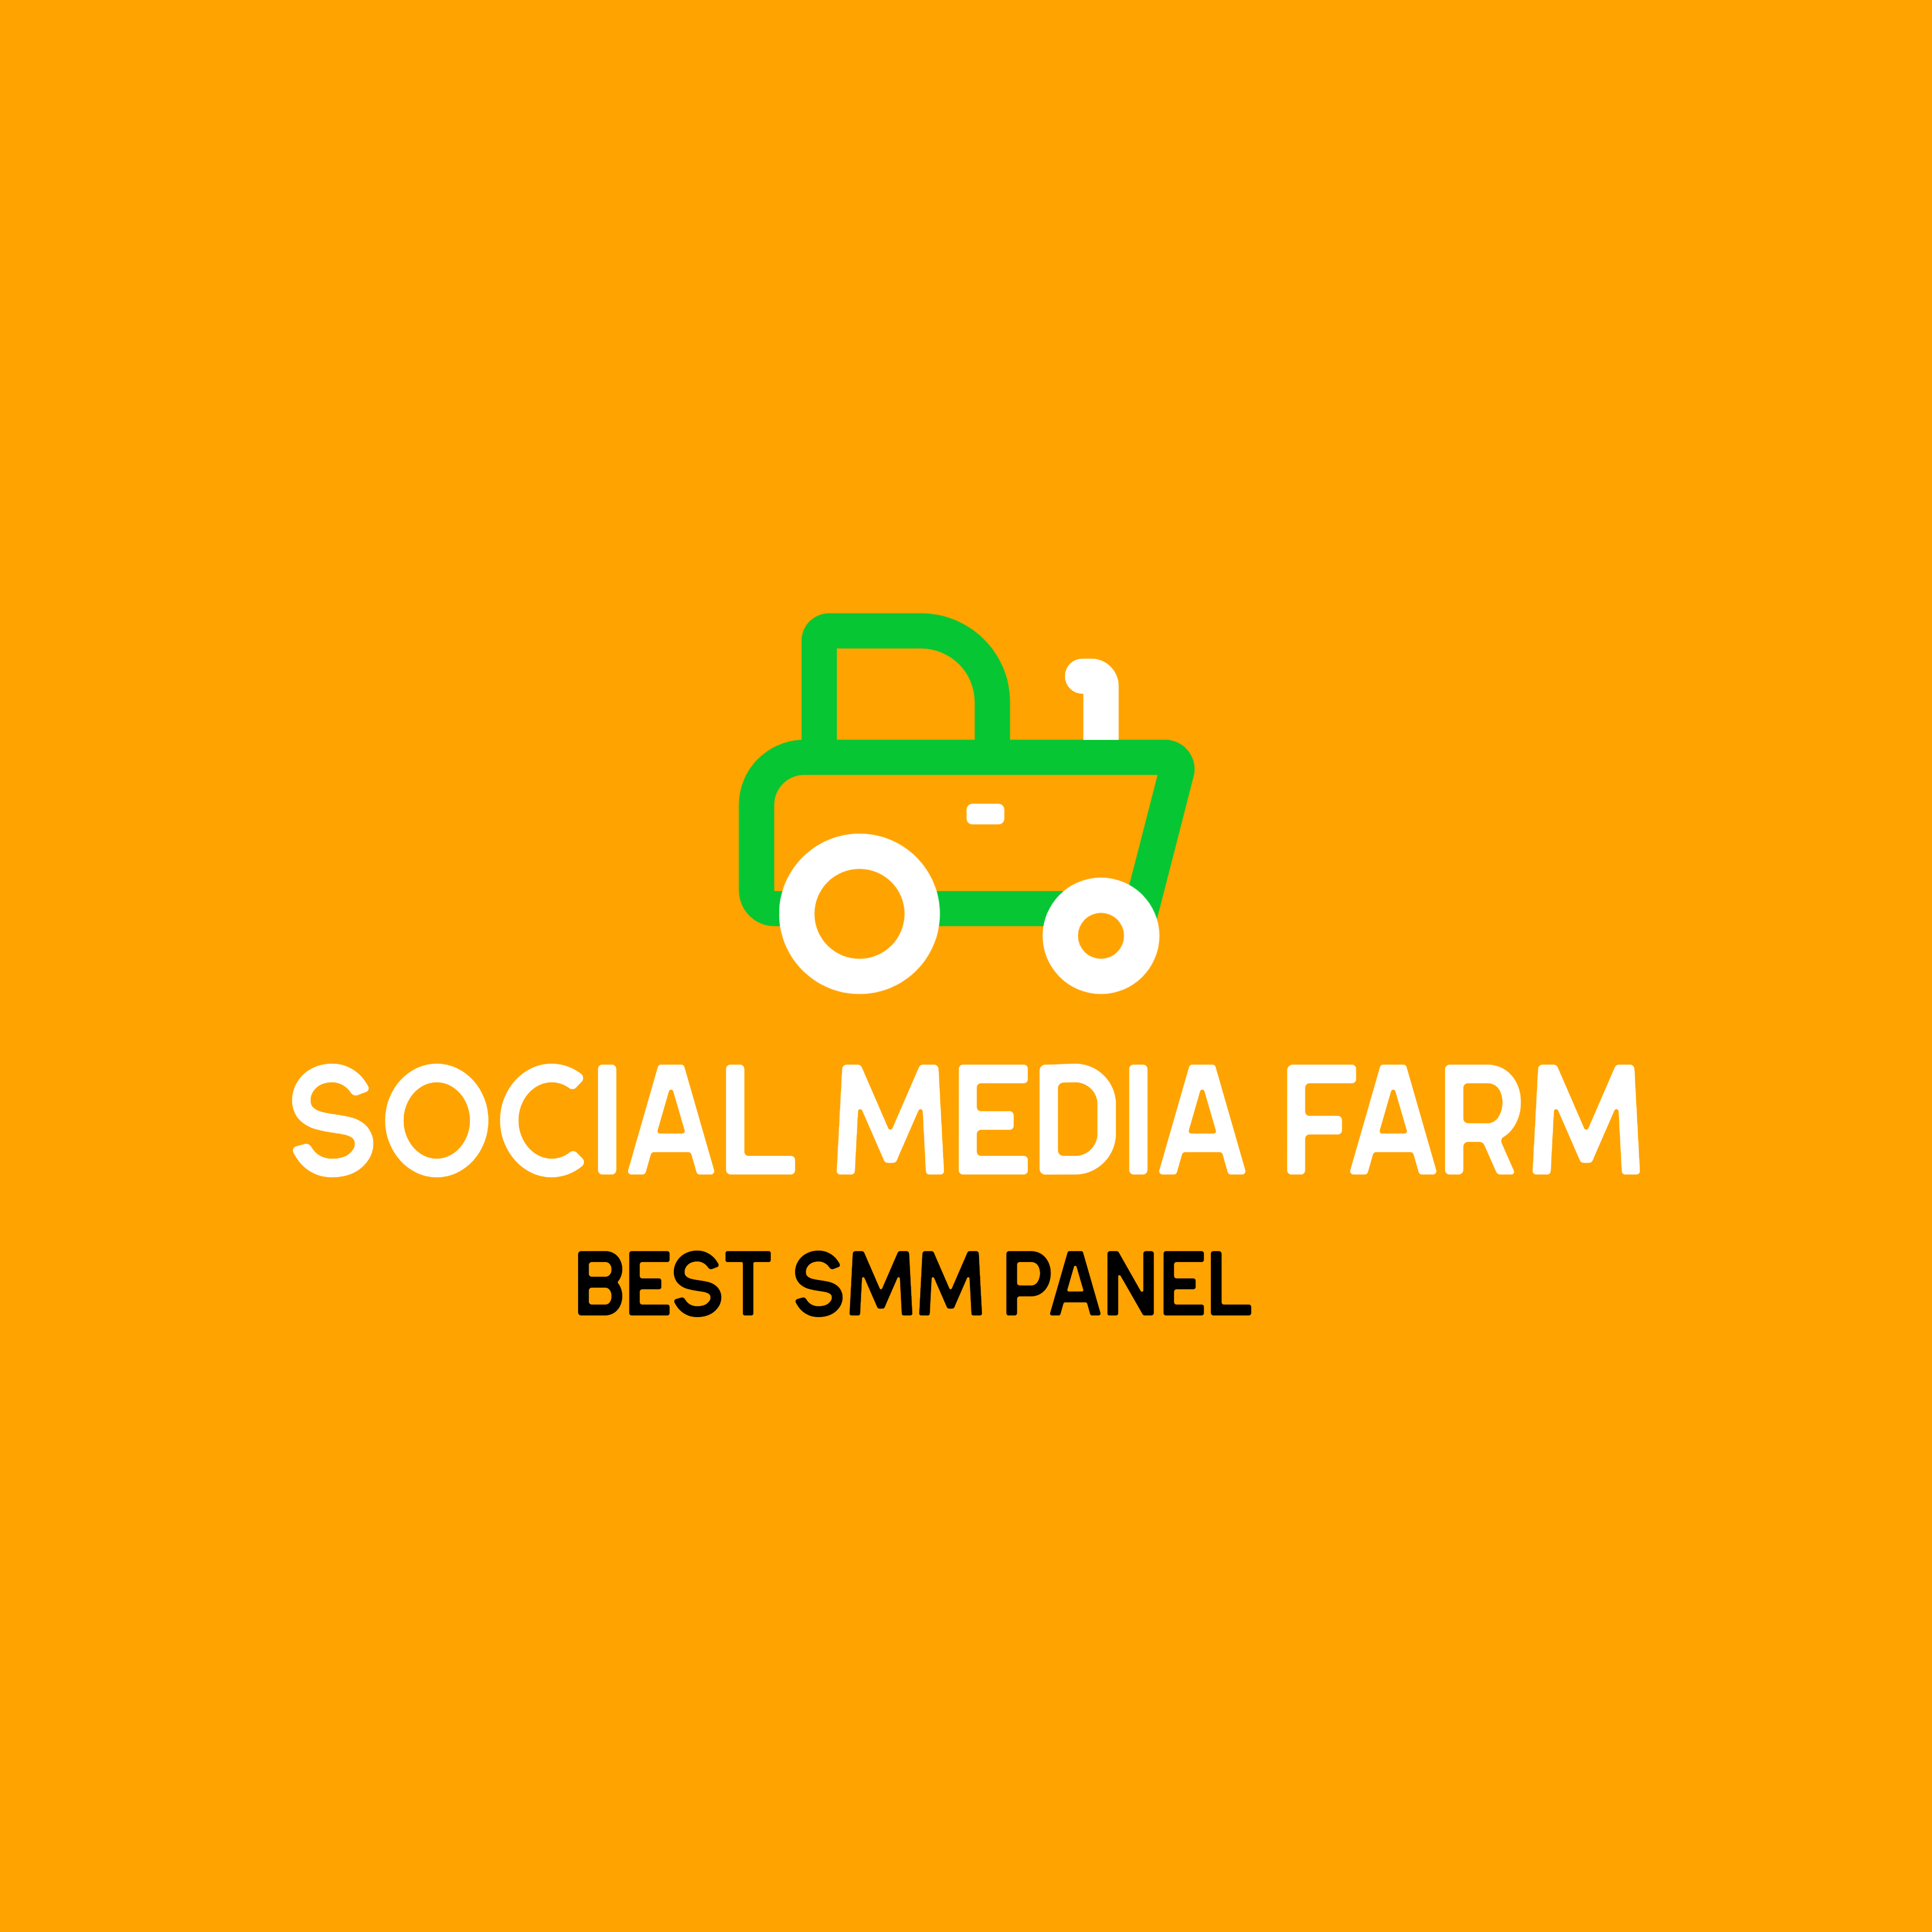 Social Media Farm Redefines Social Media Management With Expert Marketing Services Across All Media Platforms